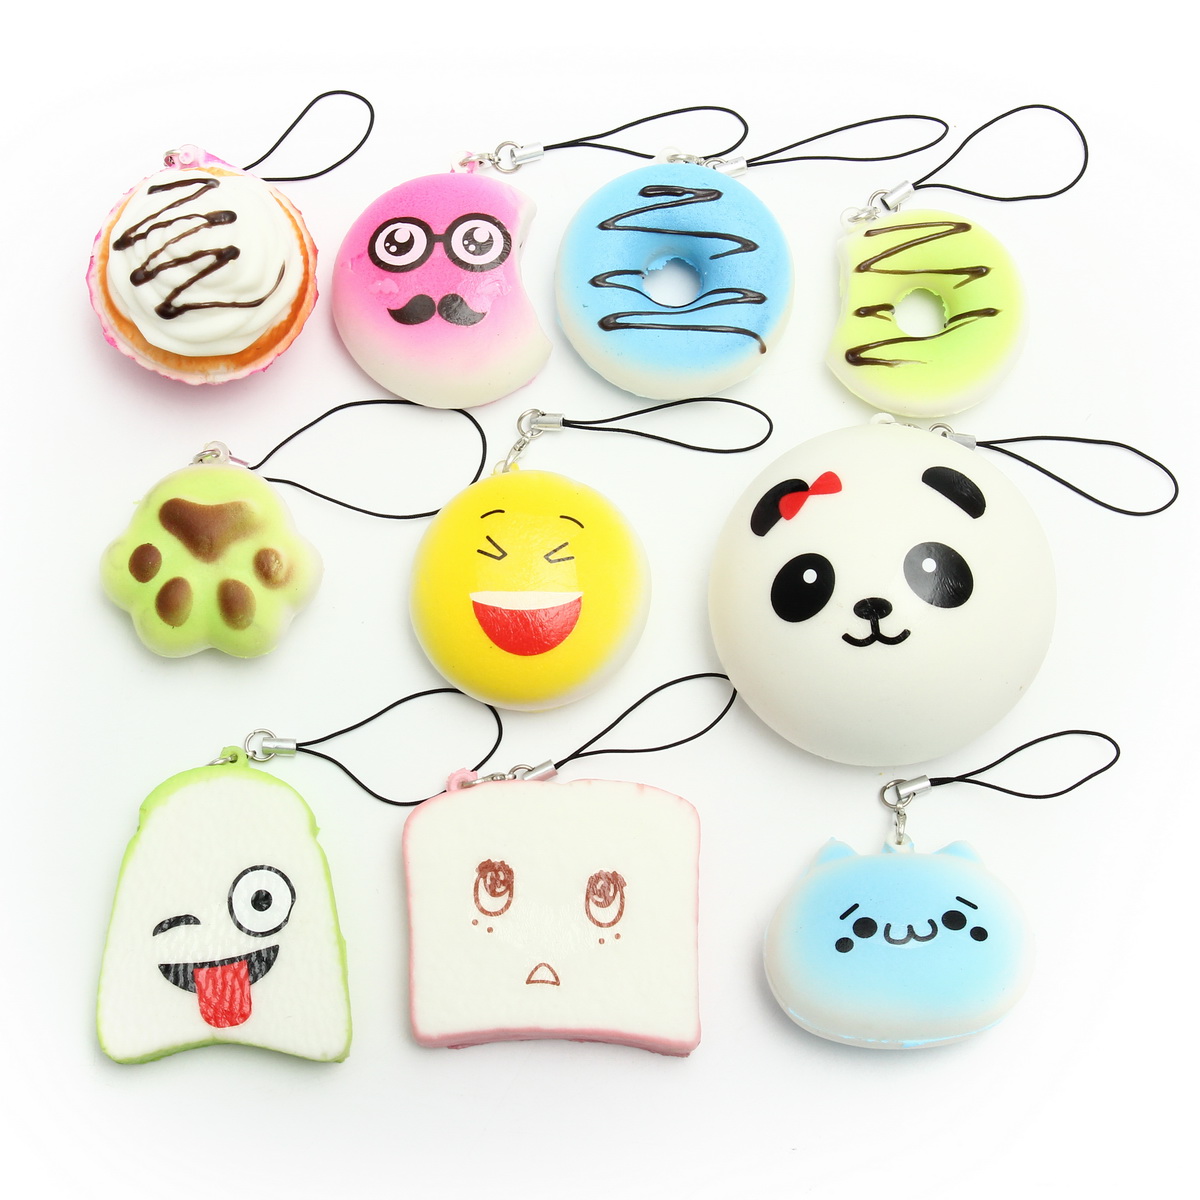 Banggood-Kawaii-10Pcs-Exquisite-Squishy-Random-Charm-Soft-PandaBreadCakeBuns-Phone-Straps-Toys-Decor-1158164-4